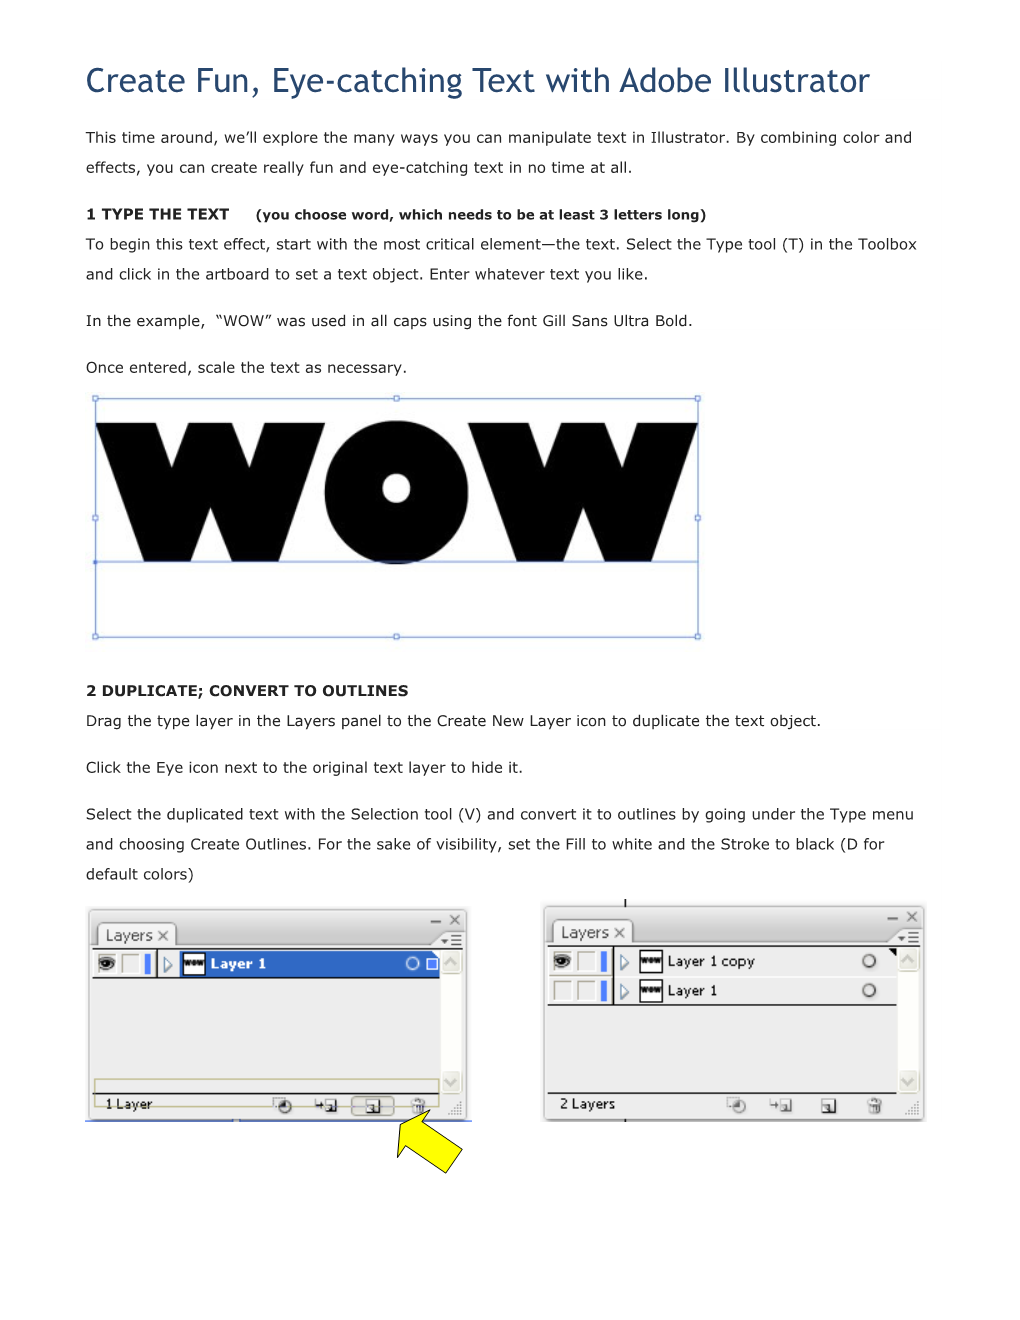 Create Fun, Eye-Catching Text with Adobe Illustrator